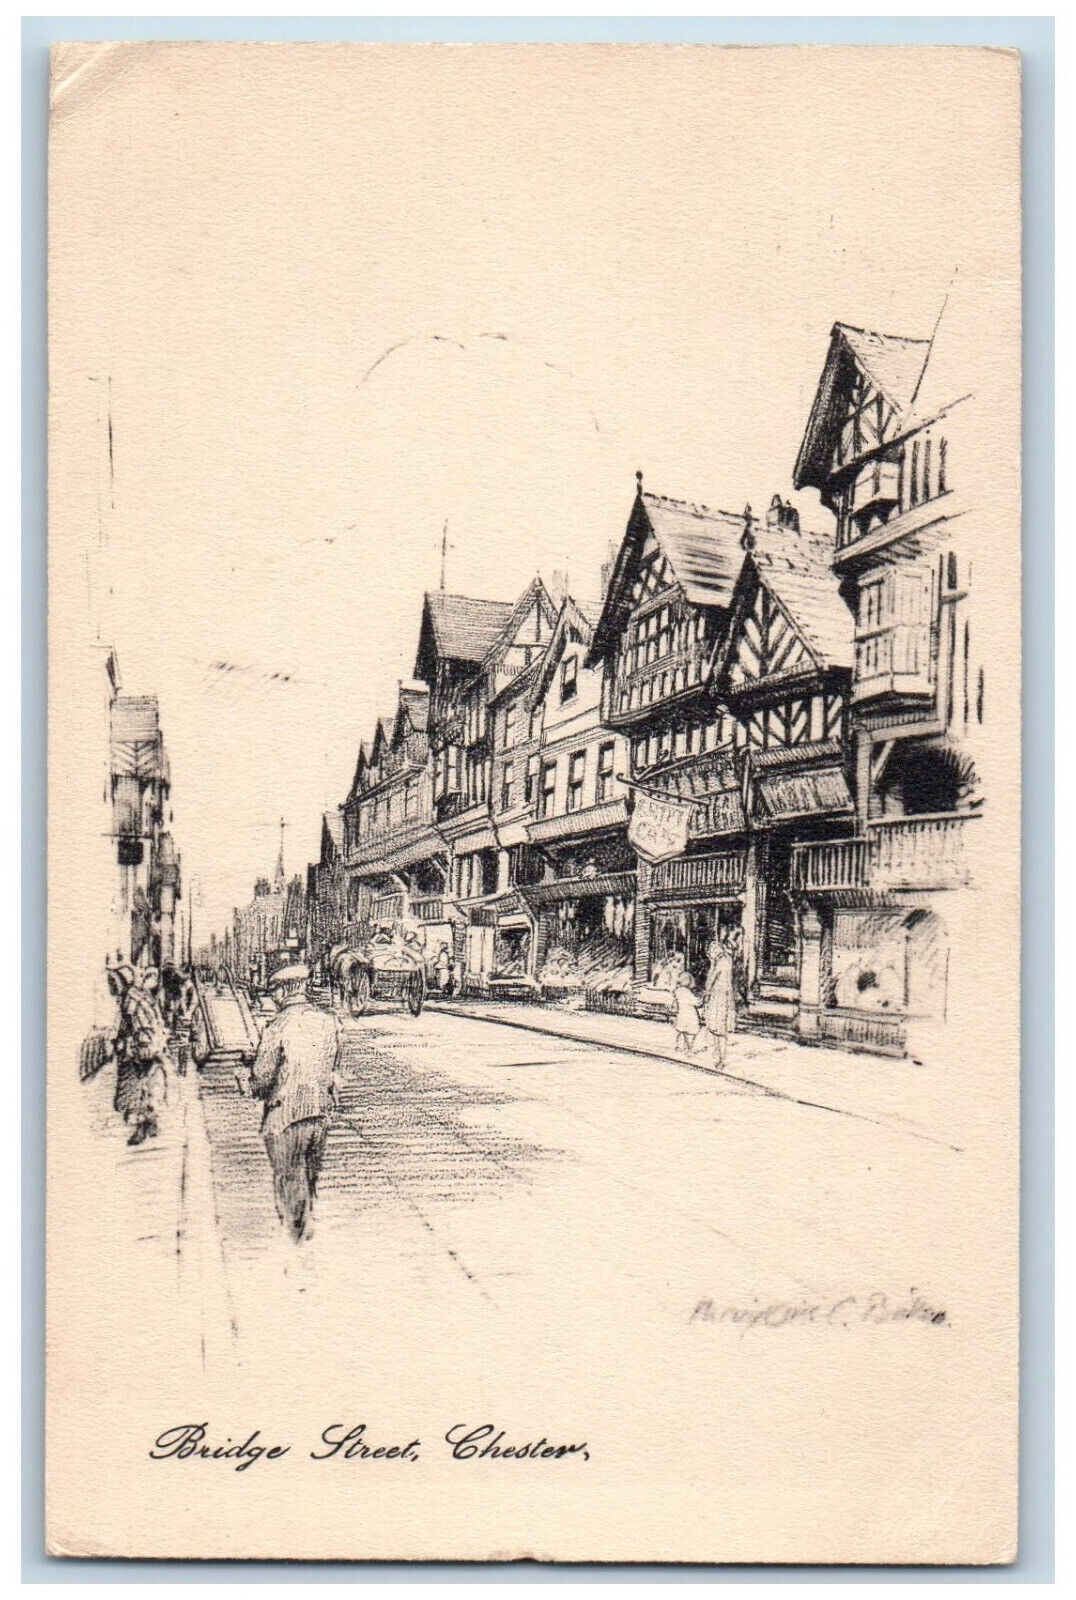 Chester Cheshire England Postcard Bridge Street Business Section c1910 Antique